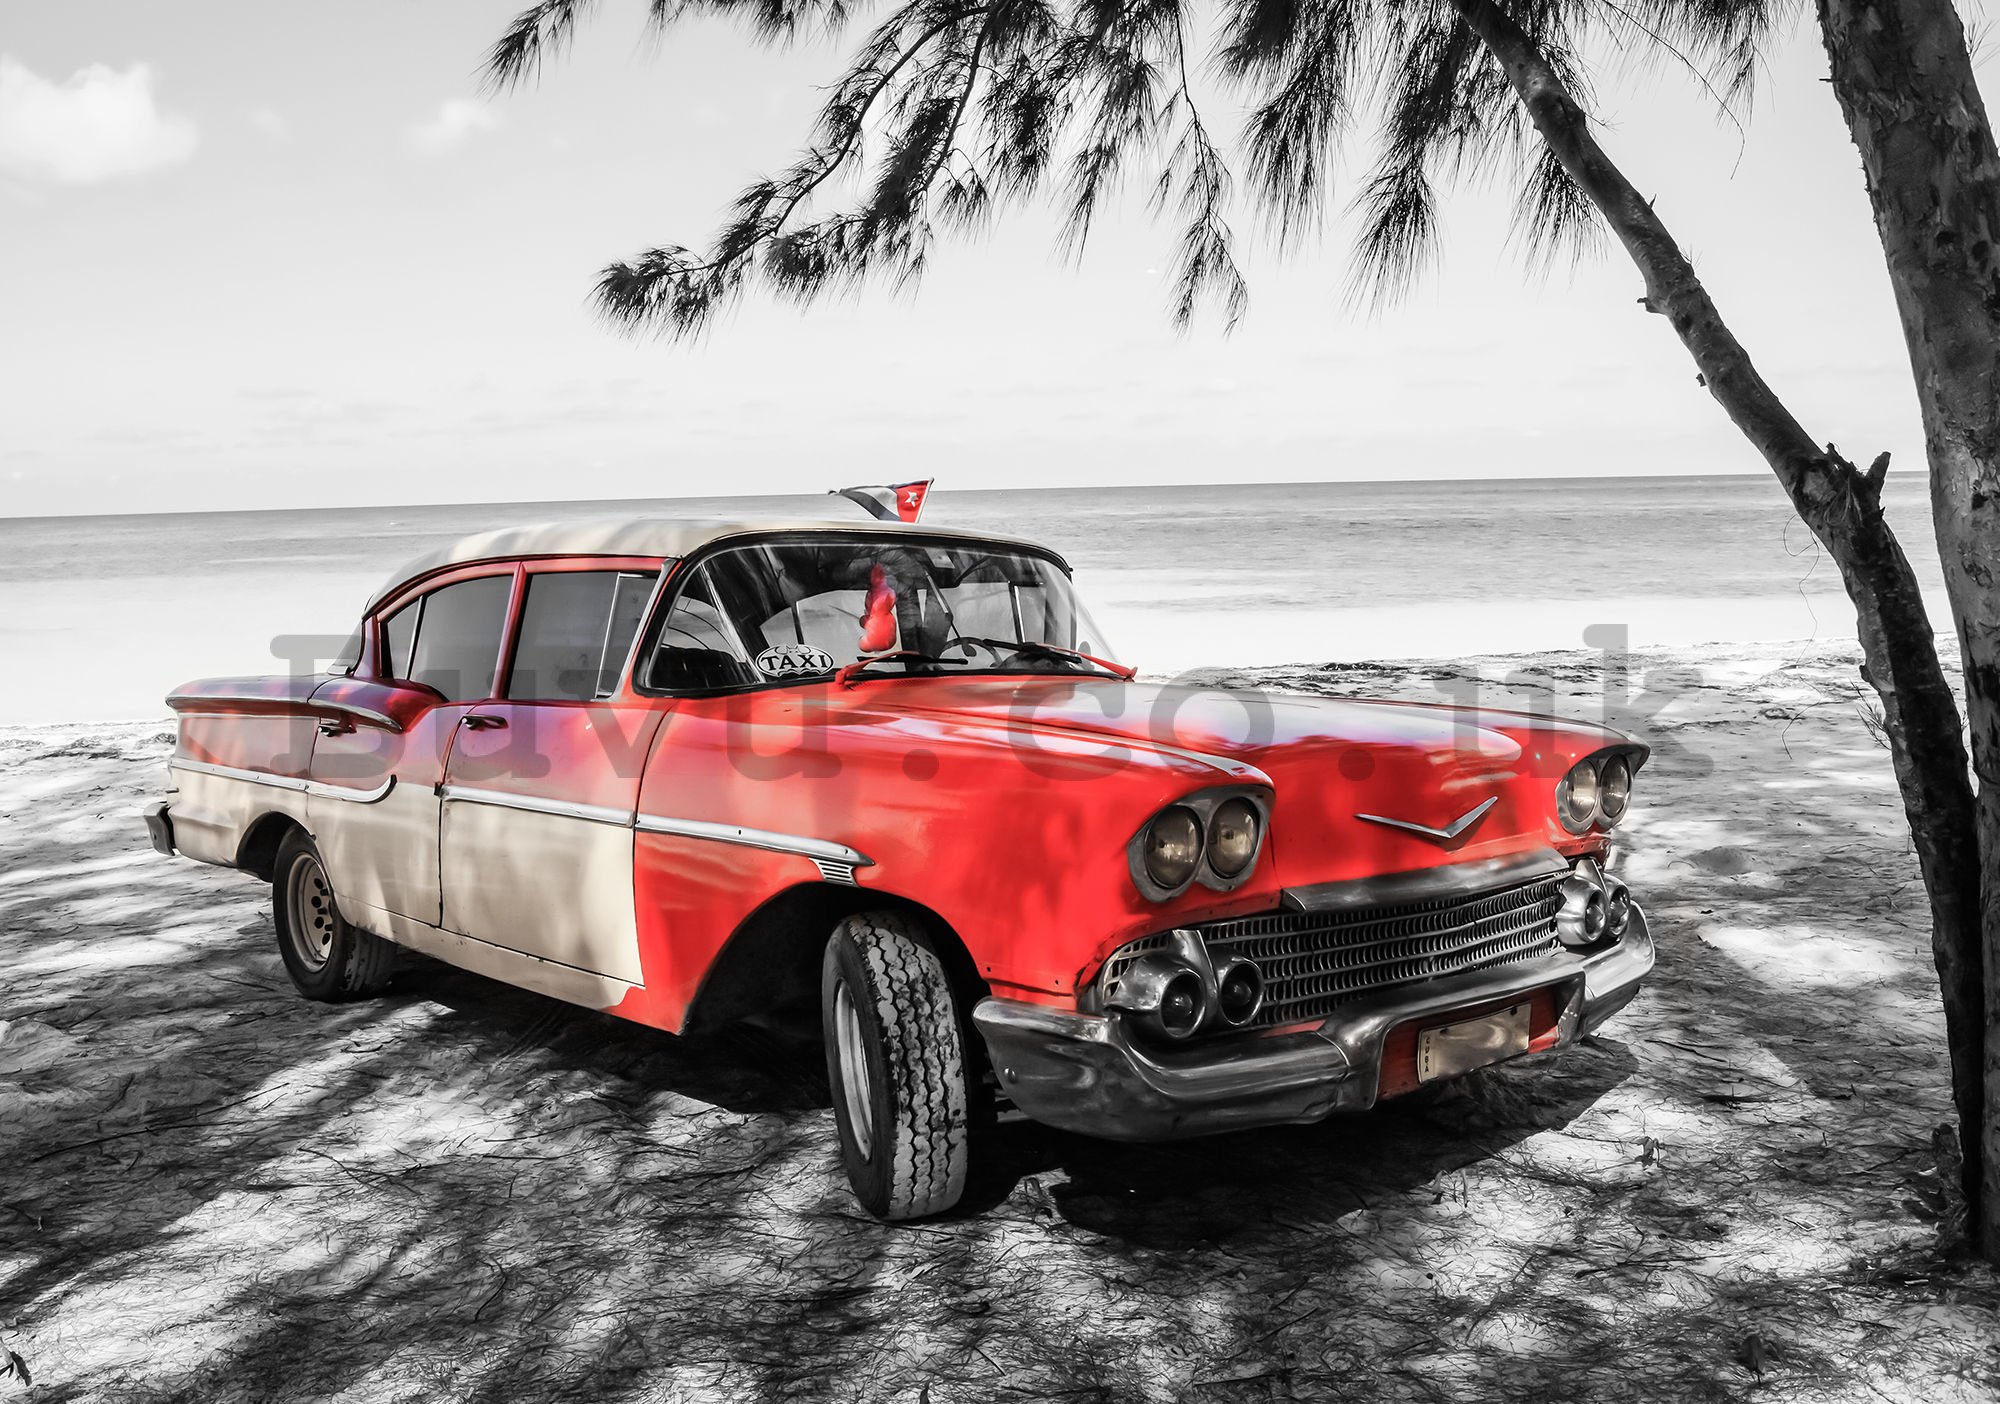 Wall mural: Cuba red car by the sea - 254x368 cm